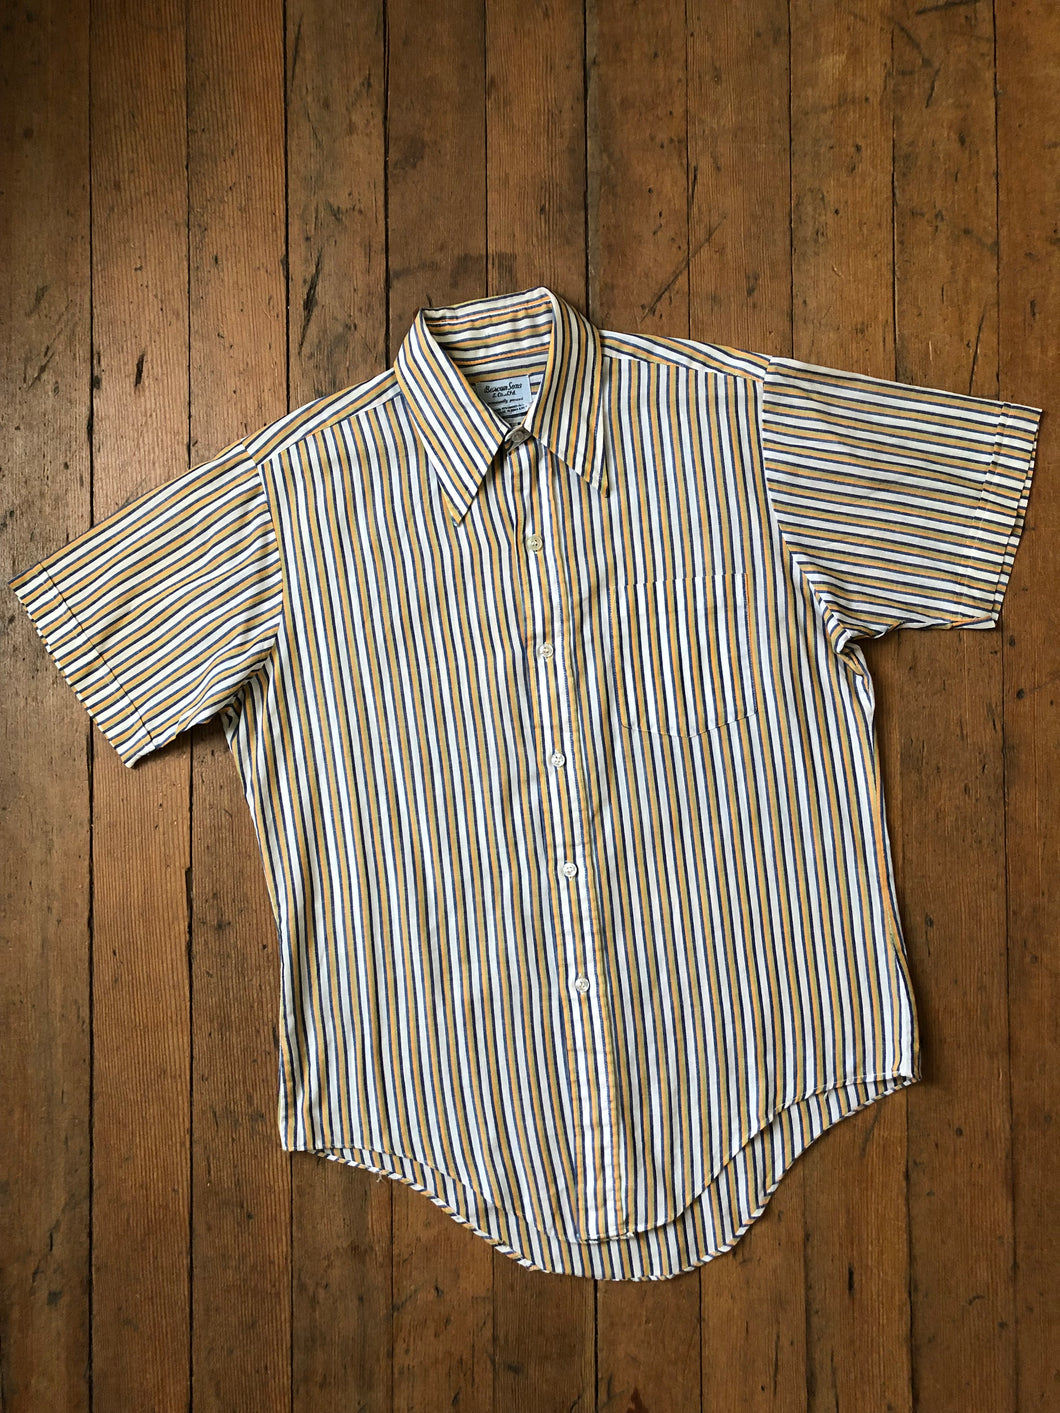 vintage 1960s striped shirt